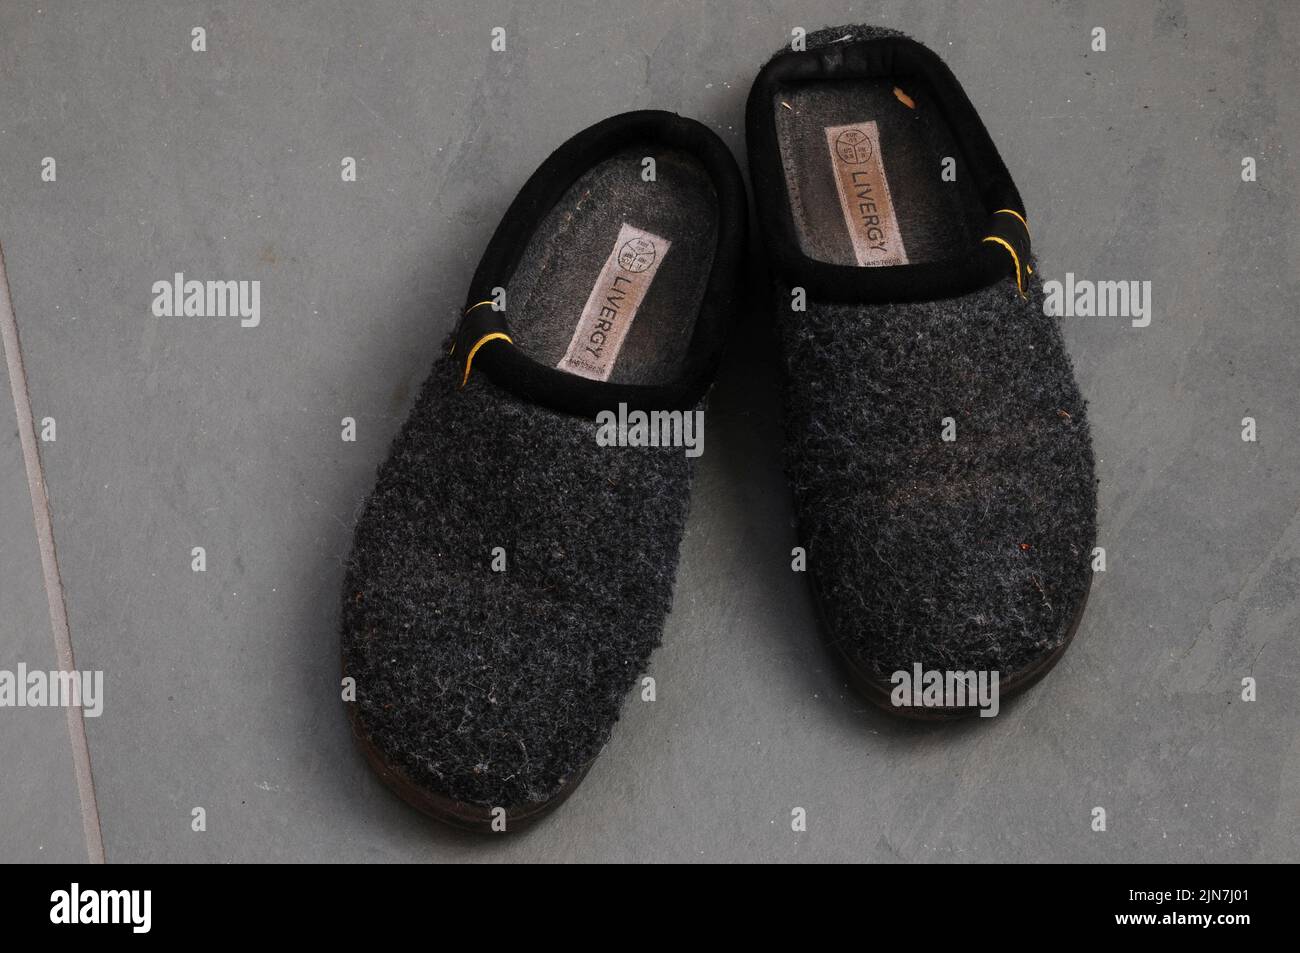 Pair of men's cosy carpet slippers Stock Photo